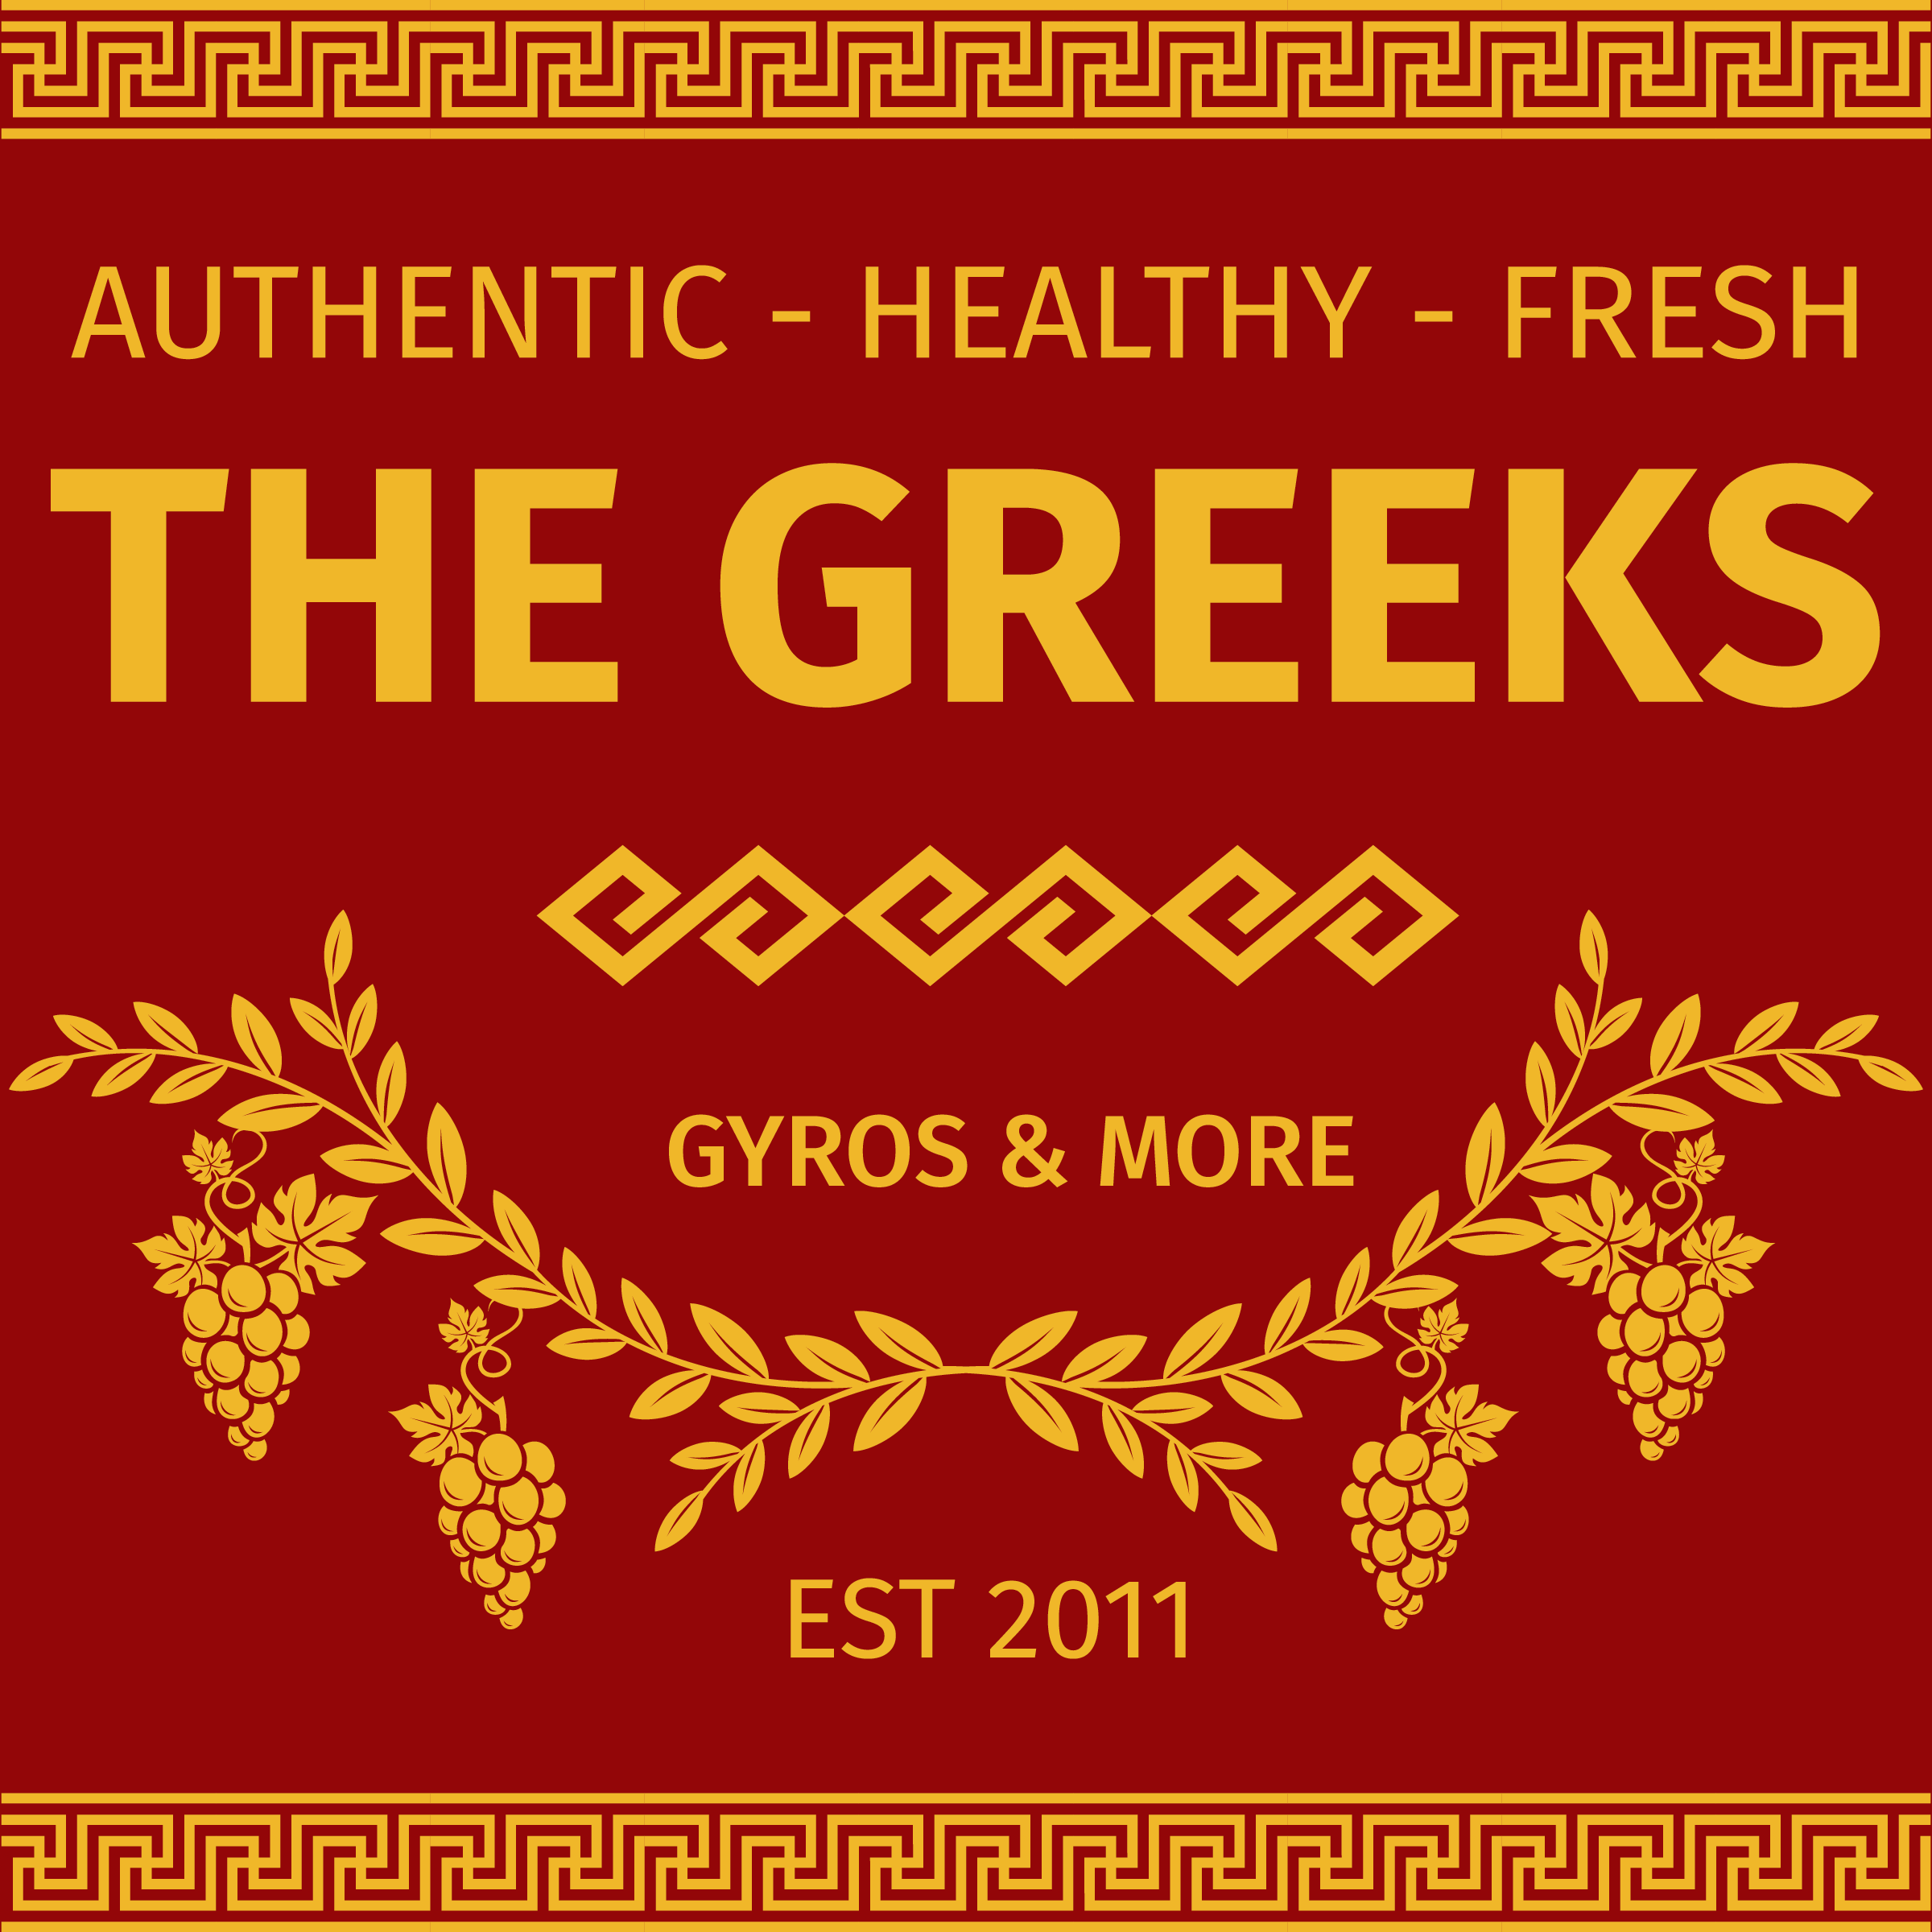 The Greeks Franchise